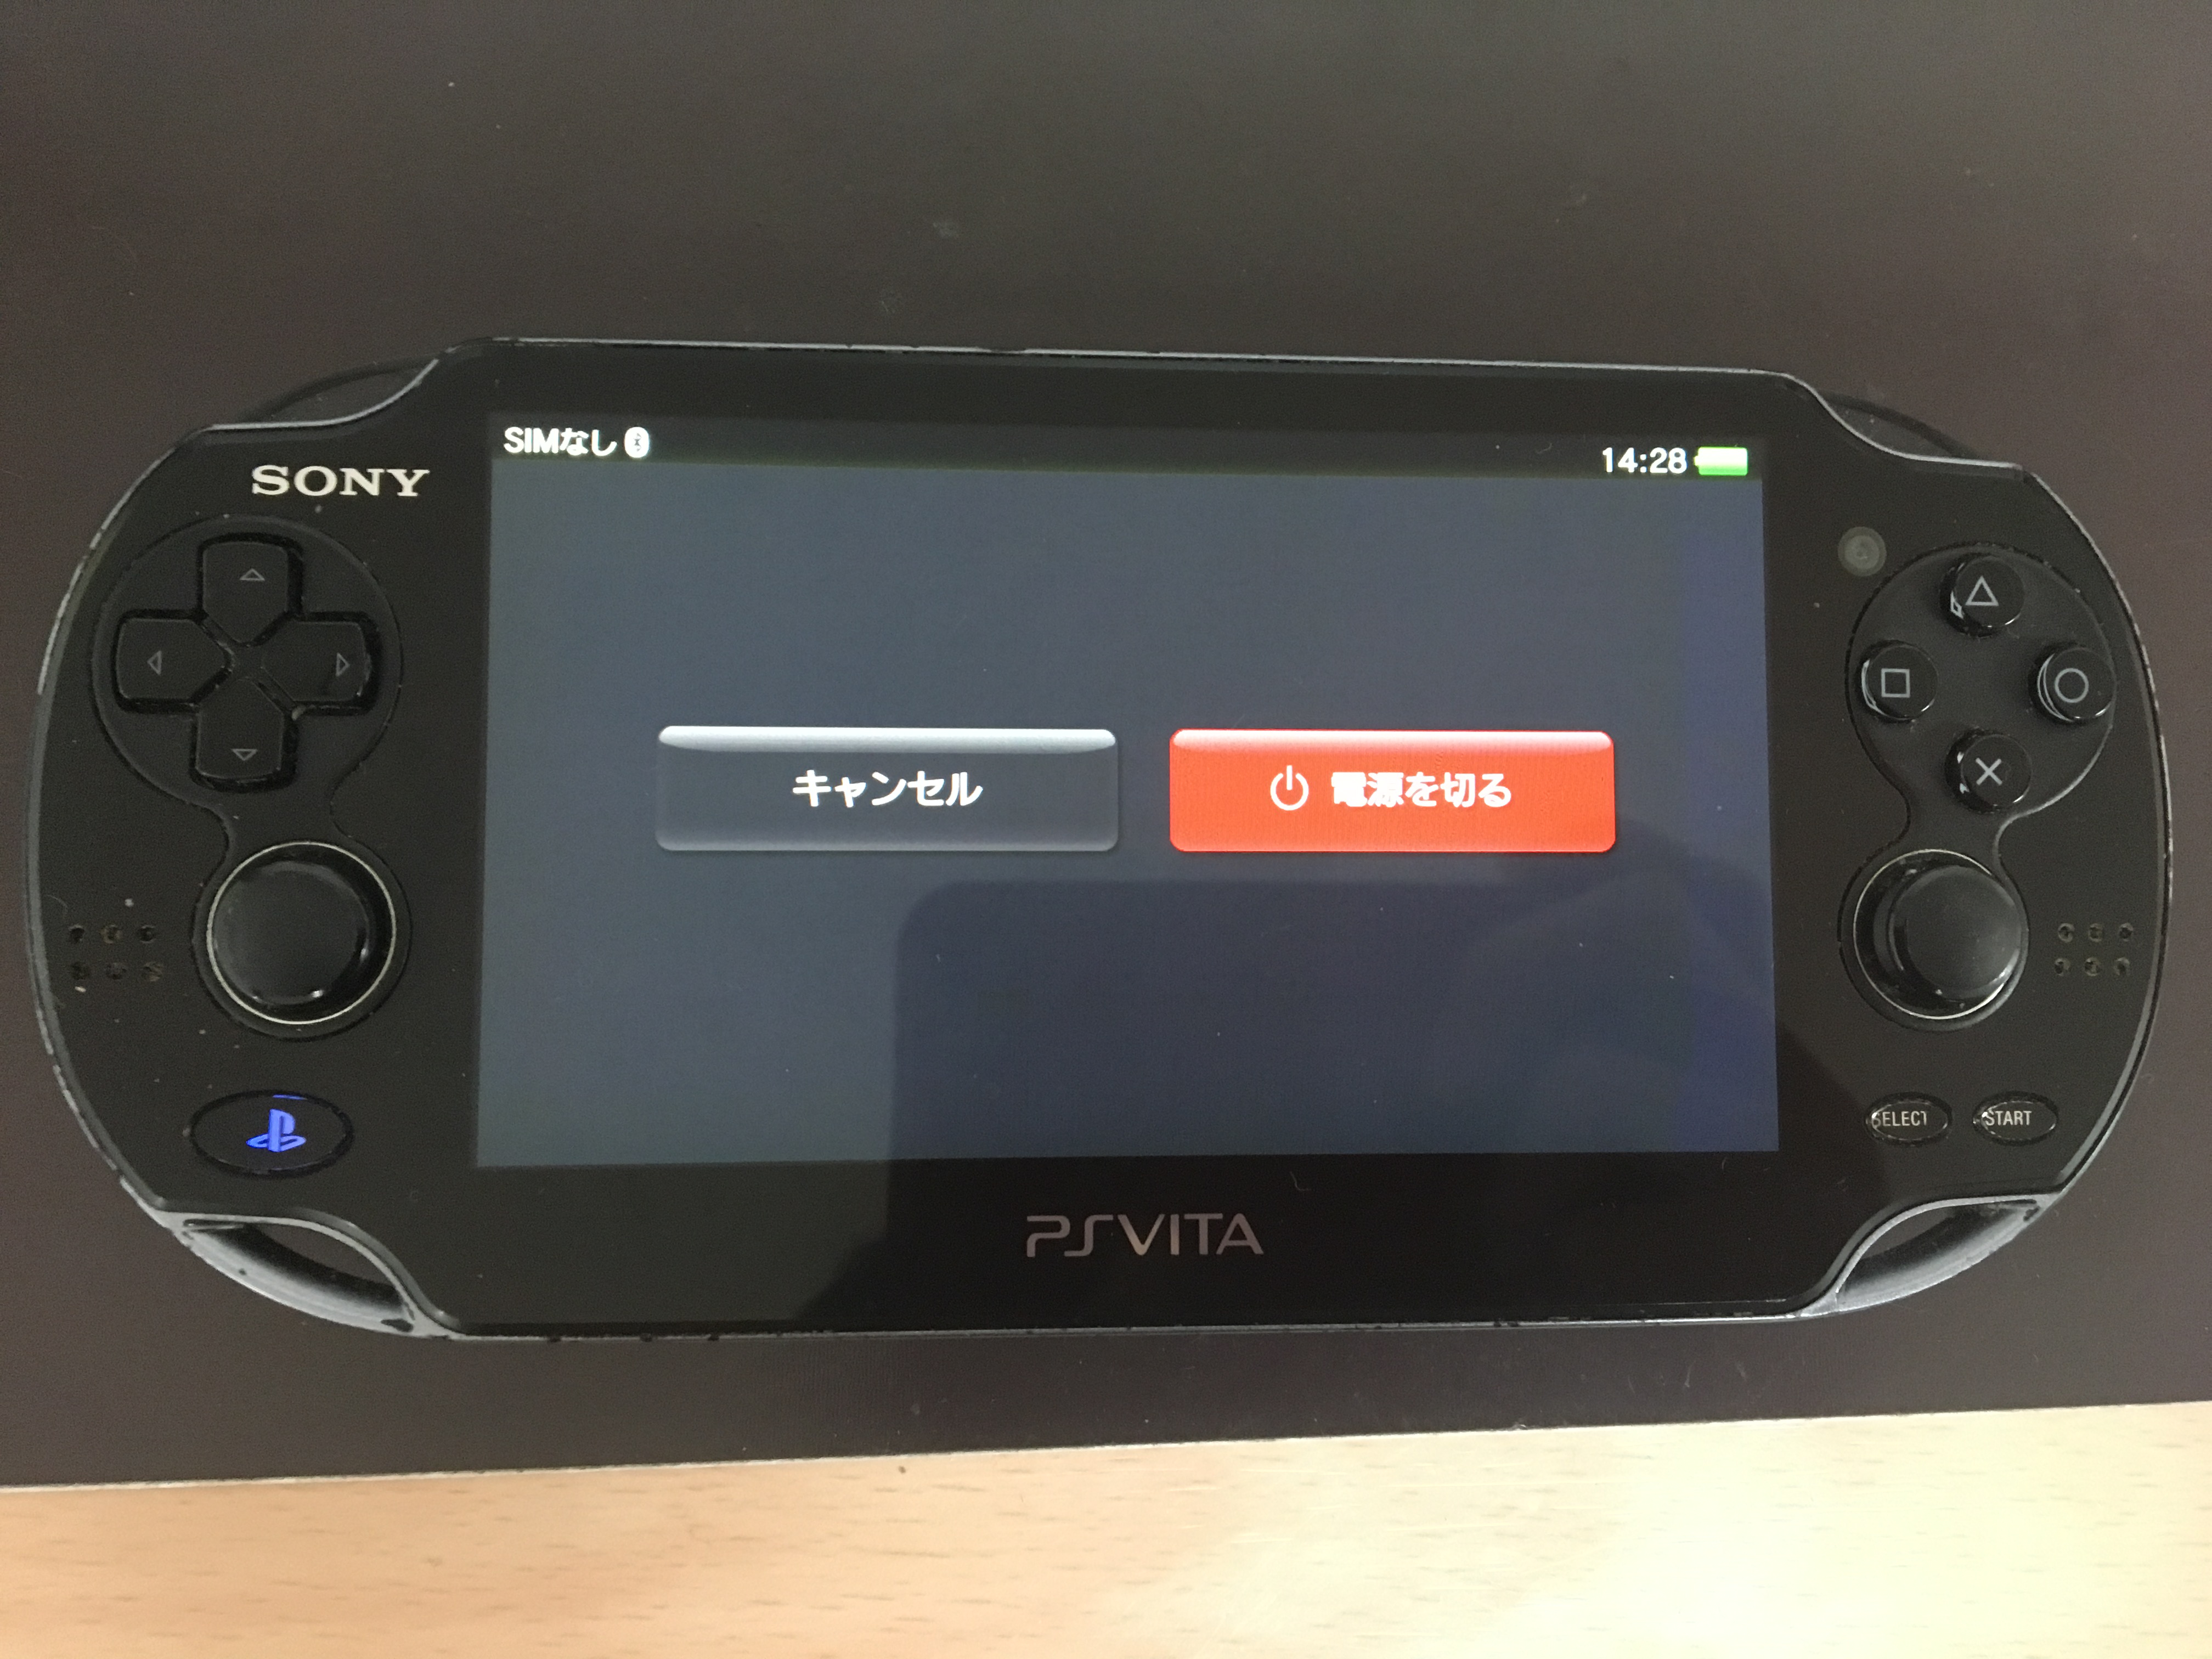 Psvita1000の左アナログスティックが効かないとpsvita左アナログスティック交換修理のご依頼をいただきました Nintendo3ds Switch Psp 修理のゲームホスピタル Nintendo3ds ニンテンドーds Psp Switch 修理